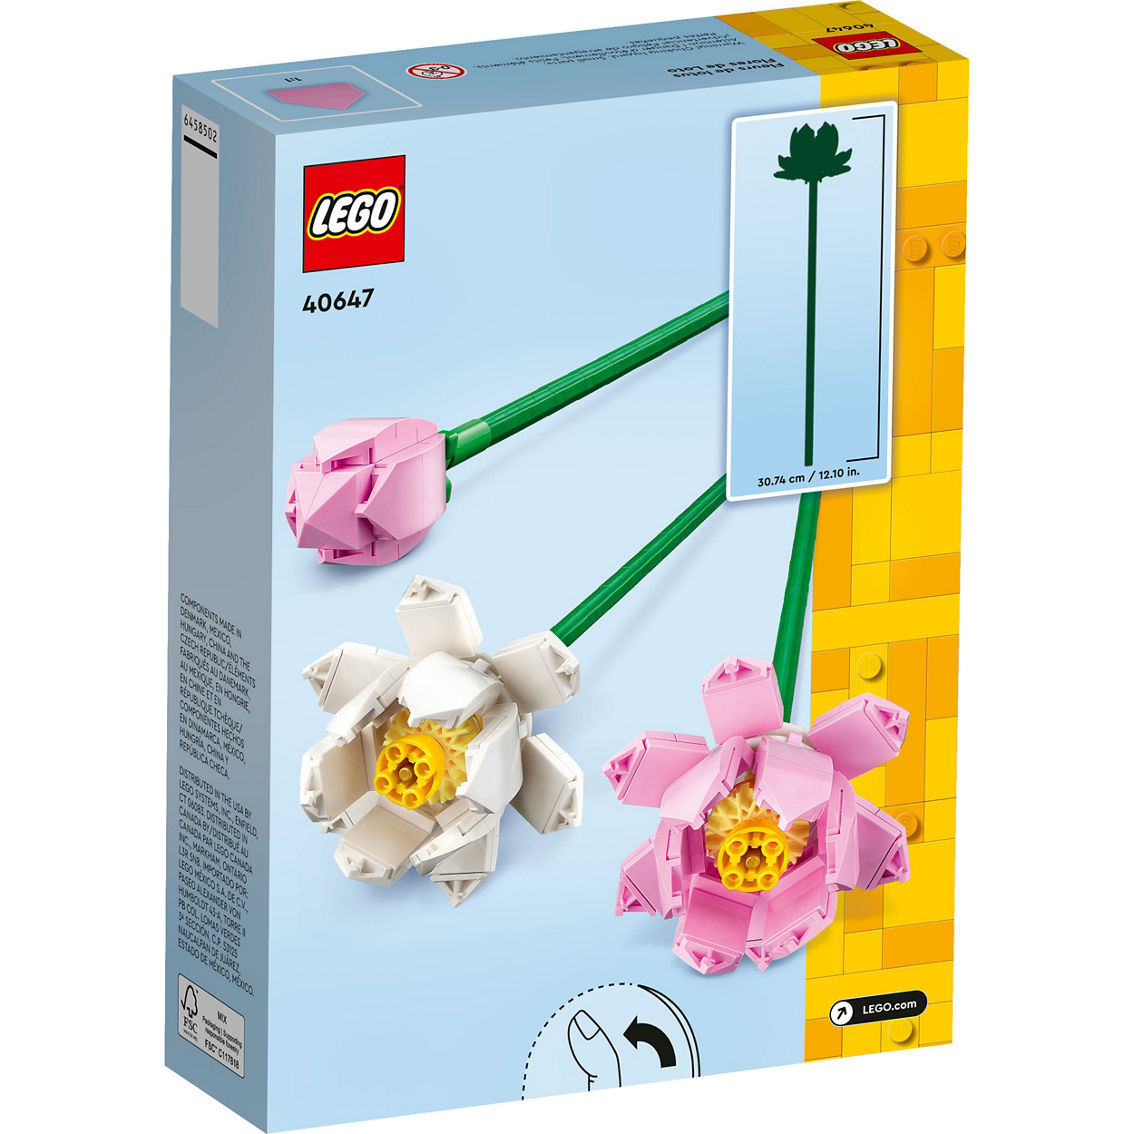 LEGO Lotus Flowers 40647 - Image 2 of 3